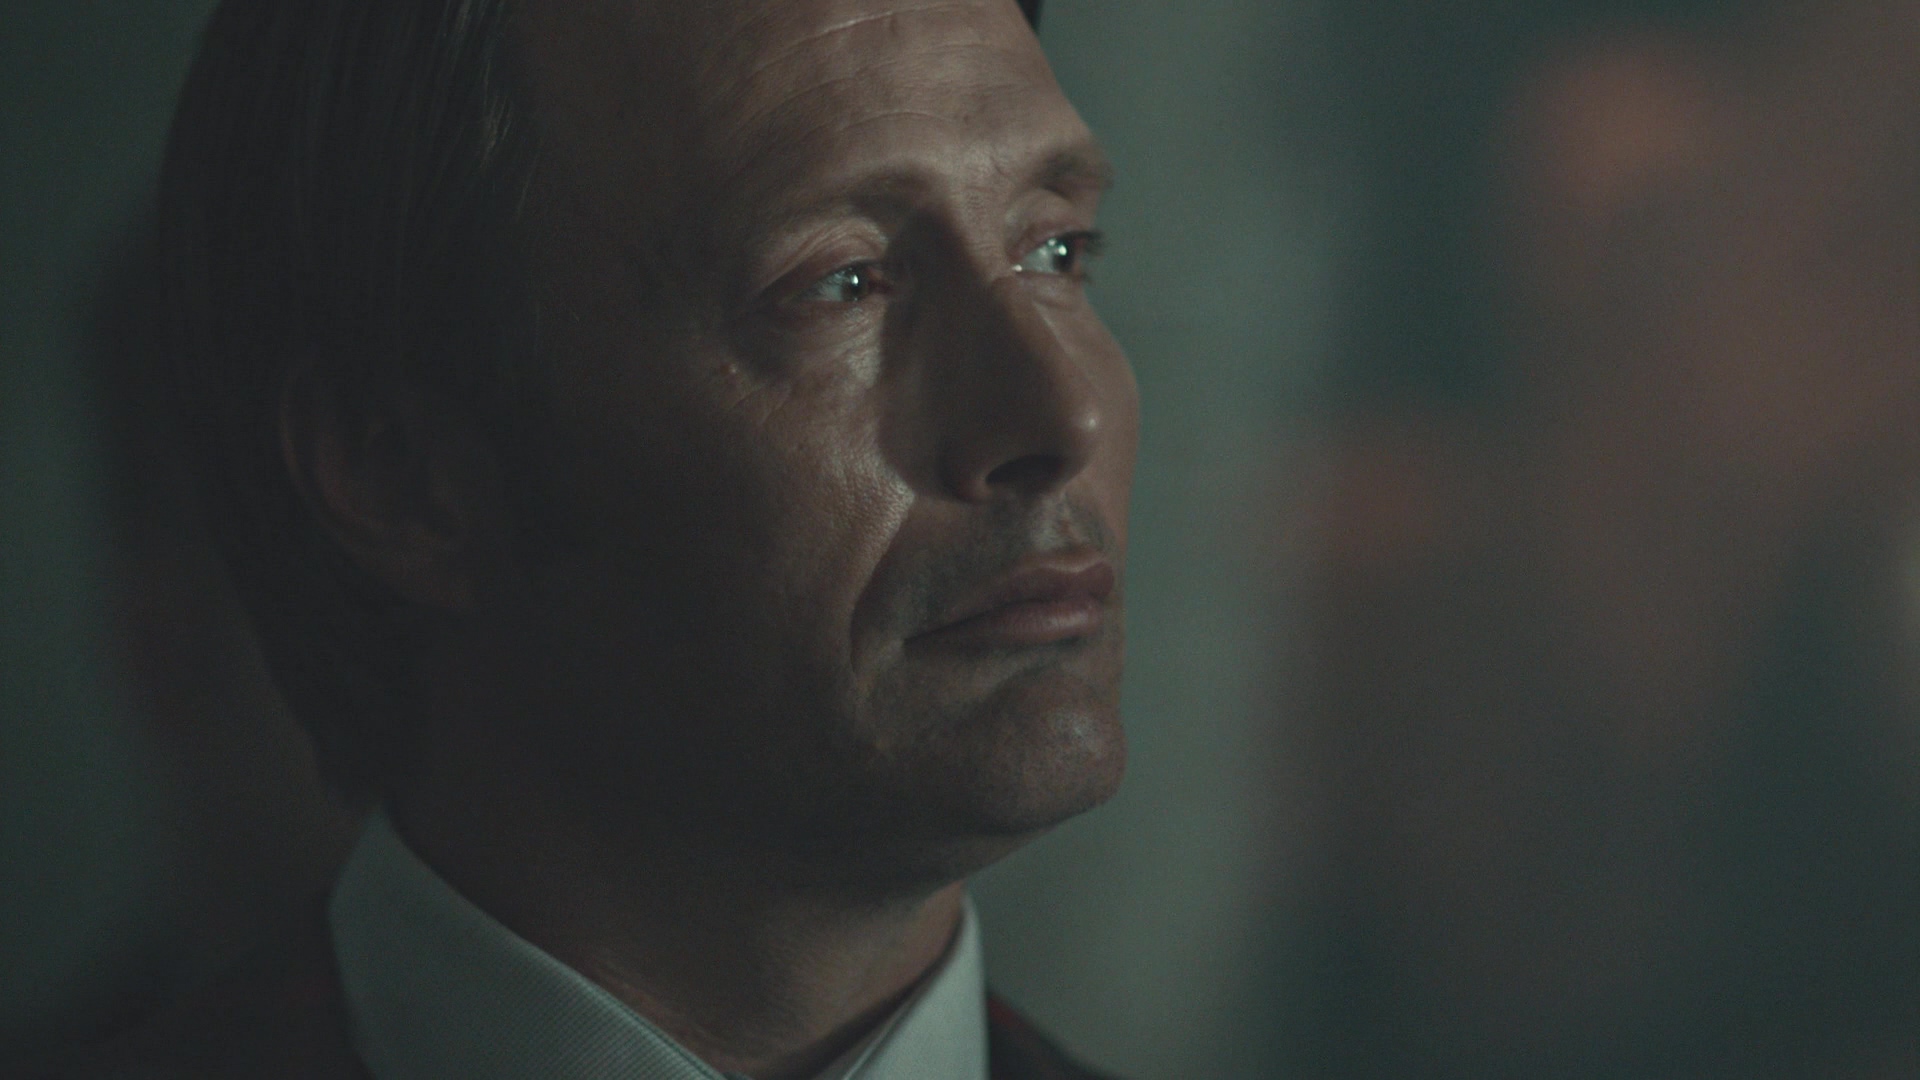 [汉尼拔].Hannibal.S02D01.2014.BluRay.1080p.AVC.DTS-HD.MA.5.1-dislike@HDSky   46.12G-4.jpg